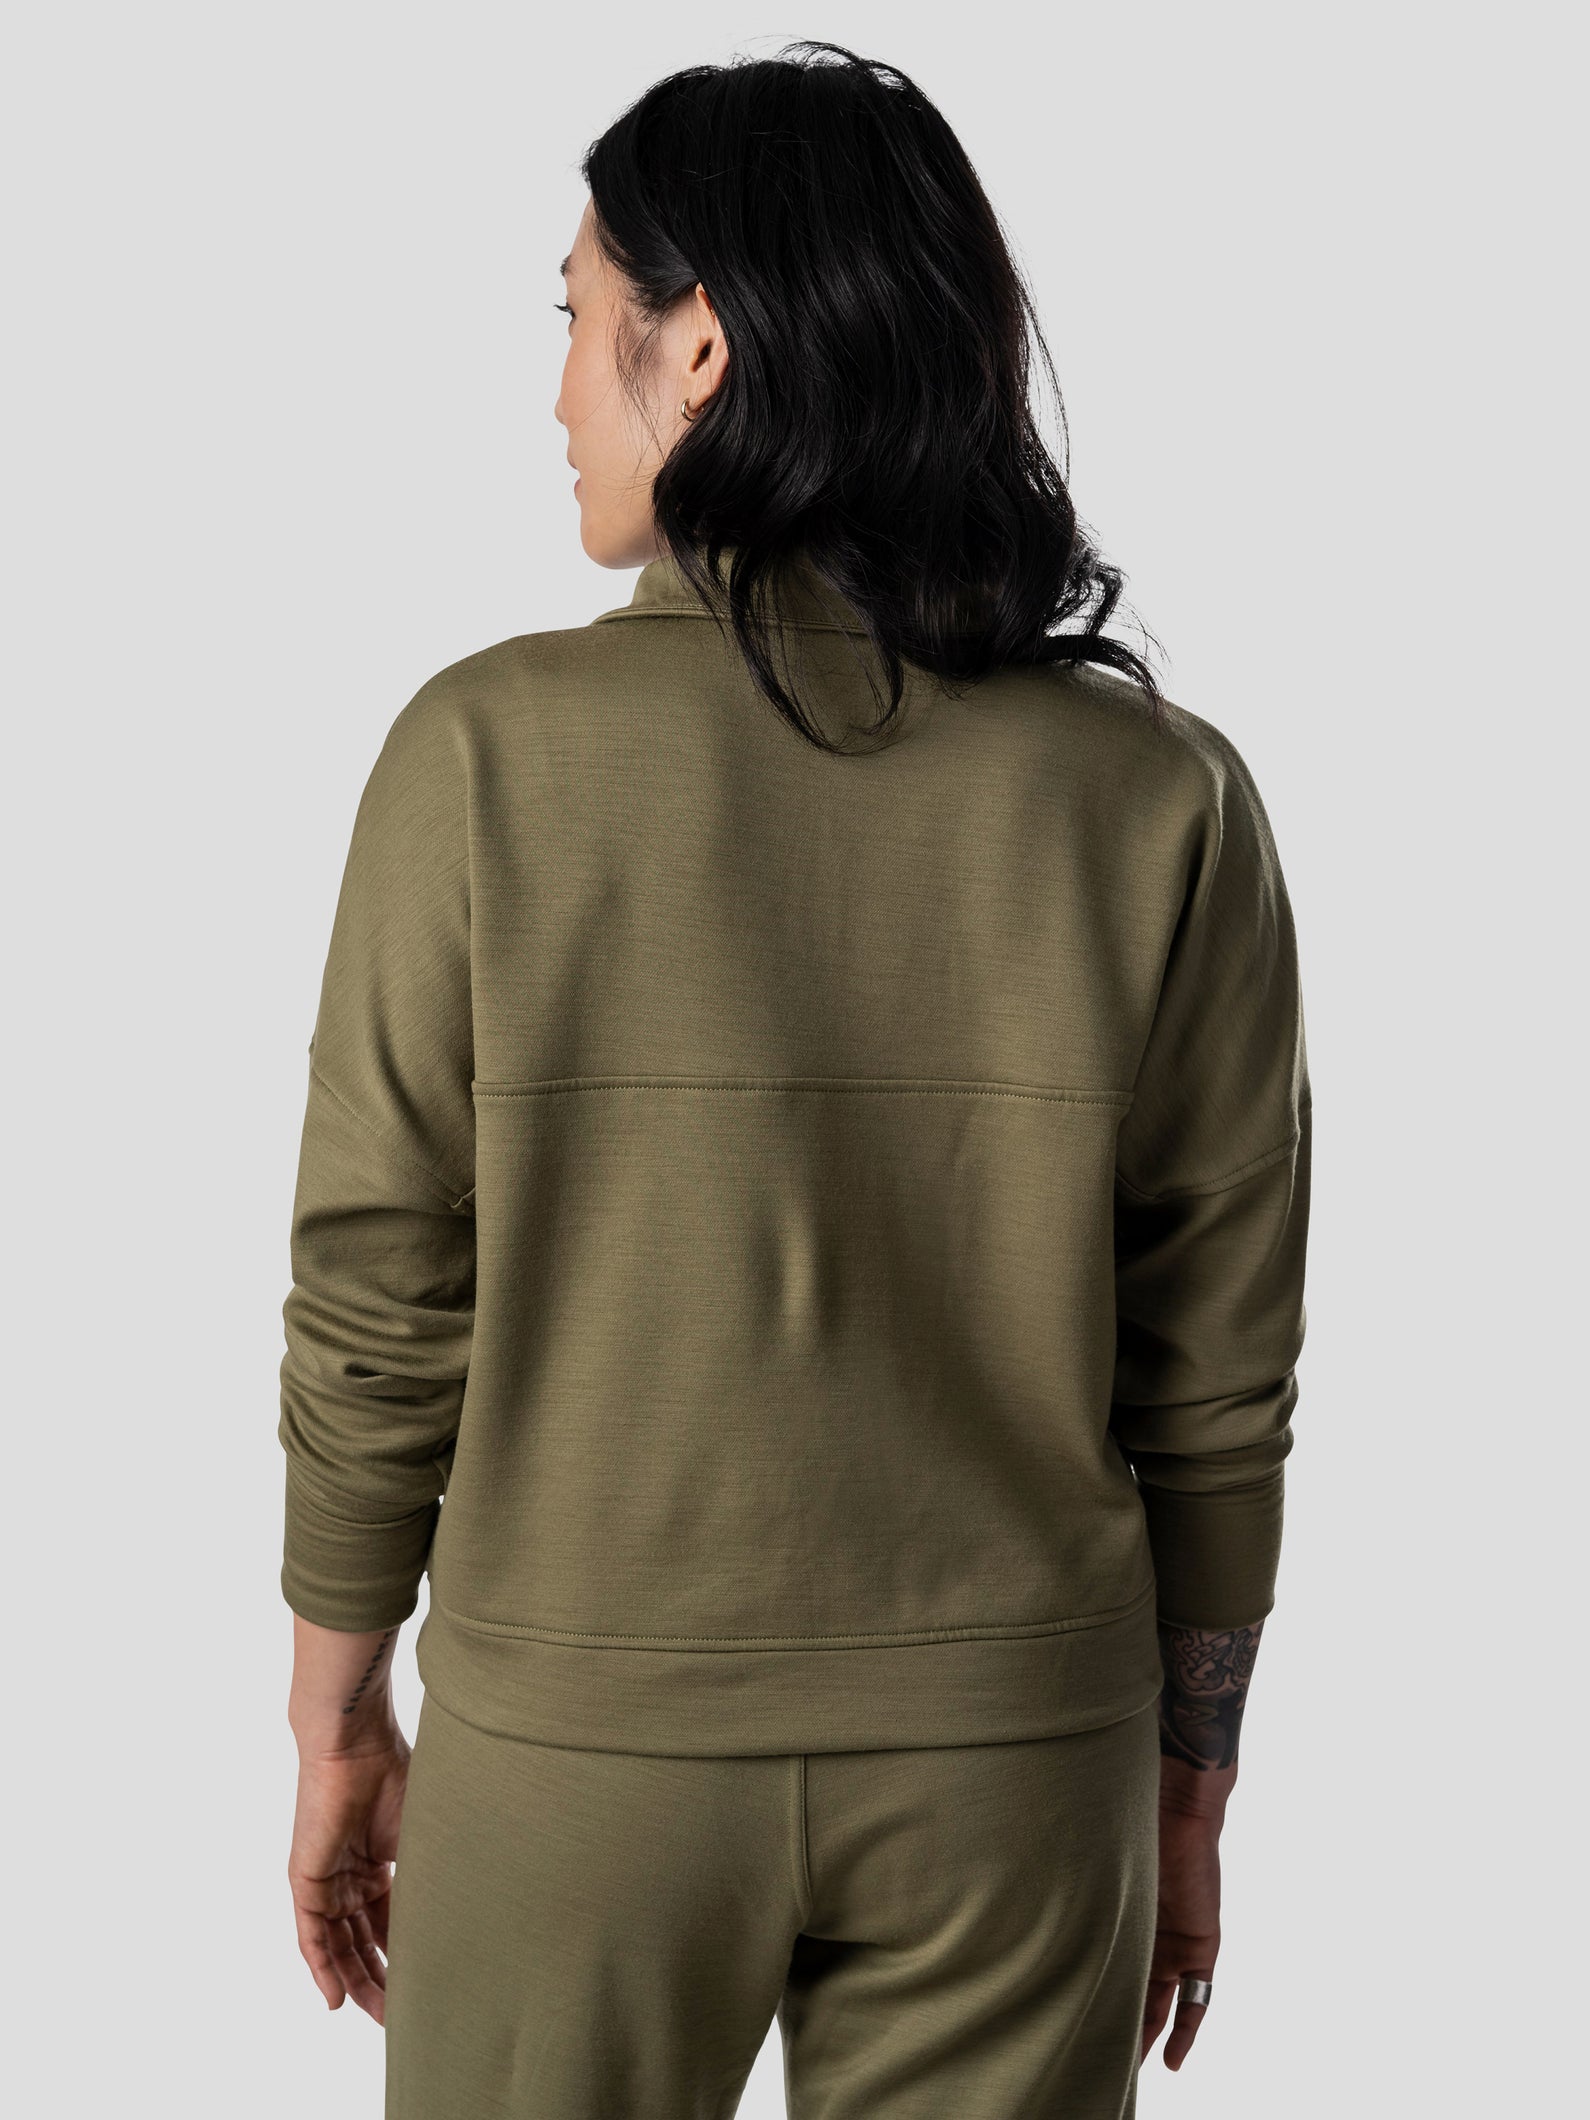 Women's Barton Fleece Pants - Military Green